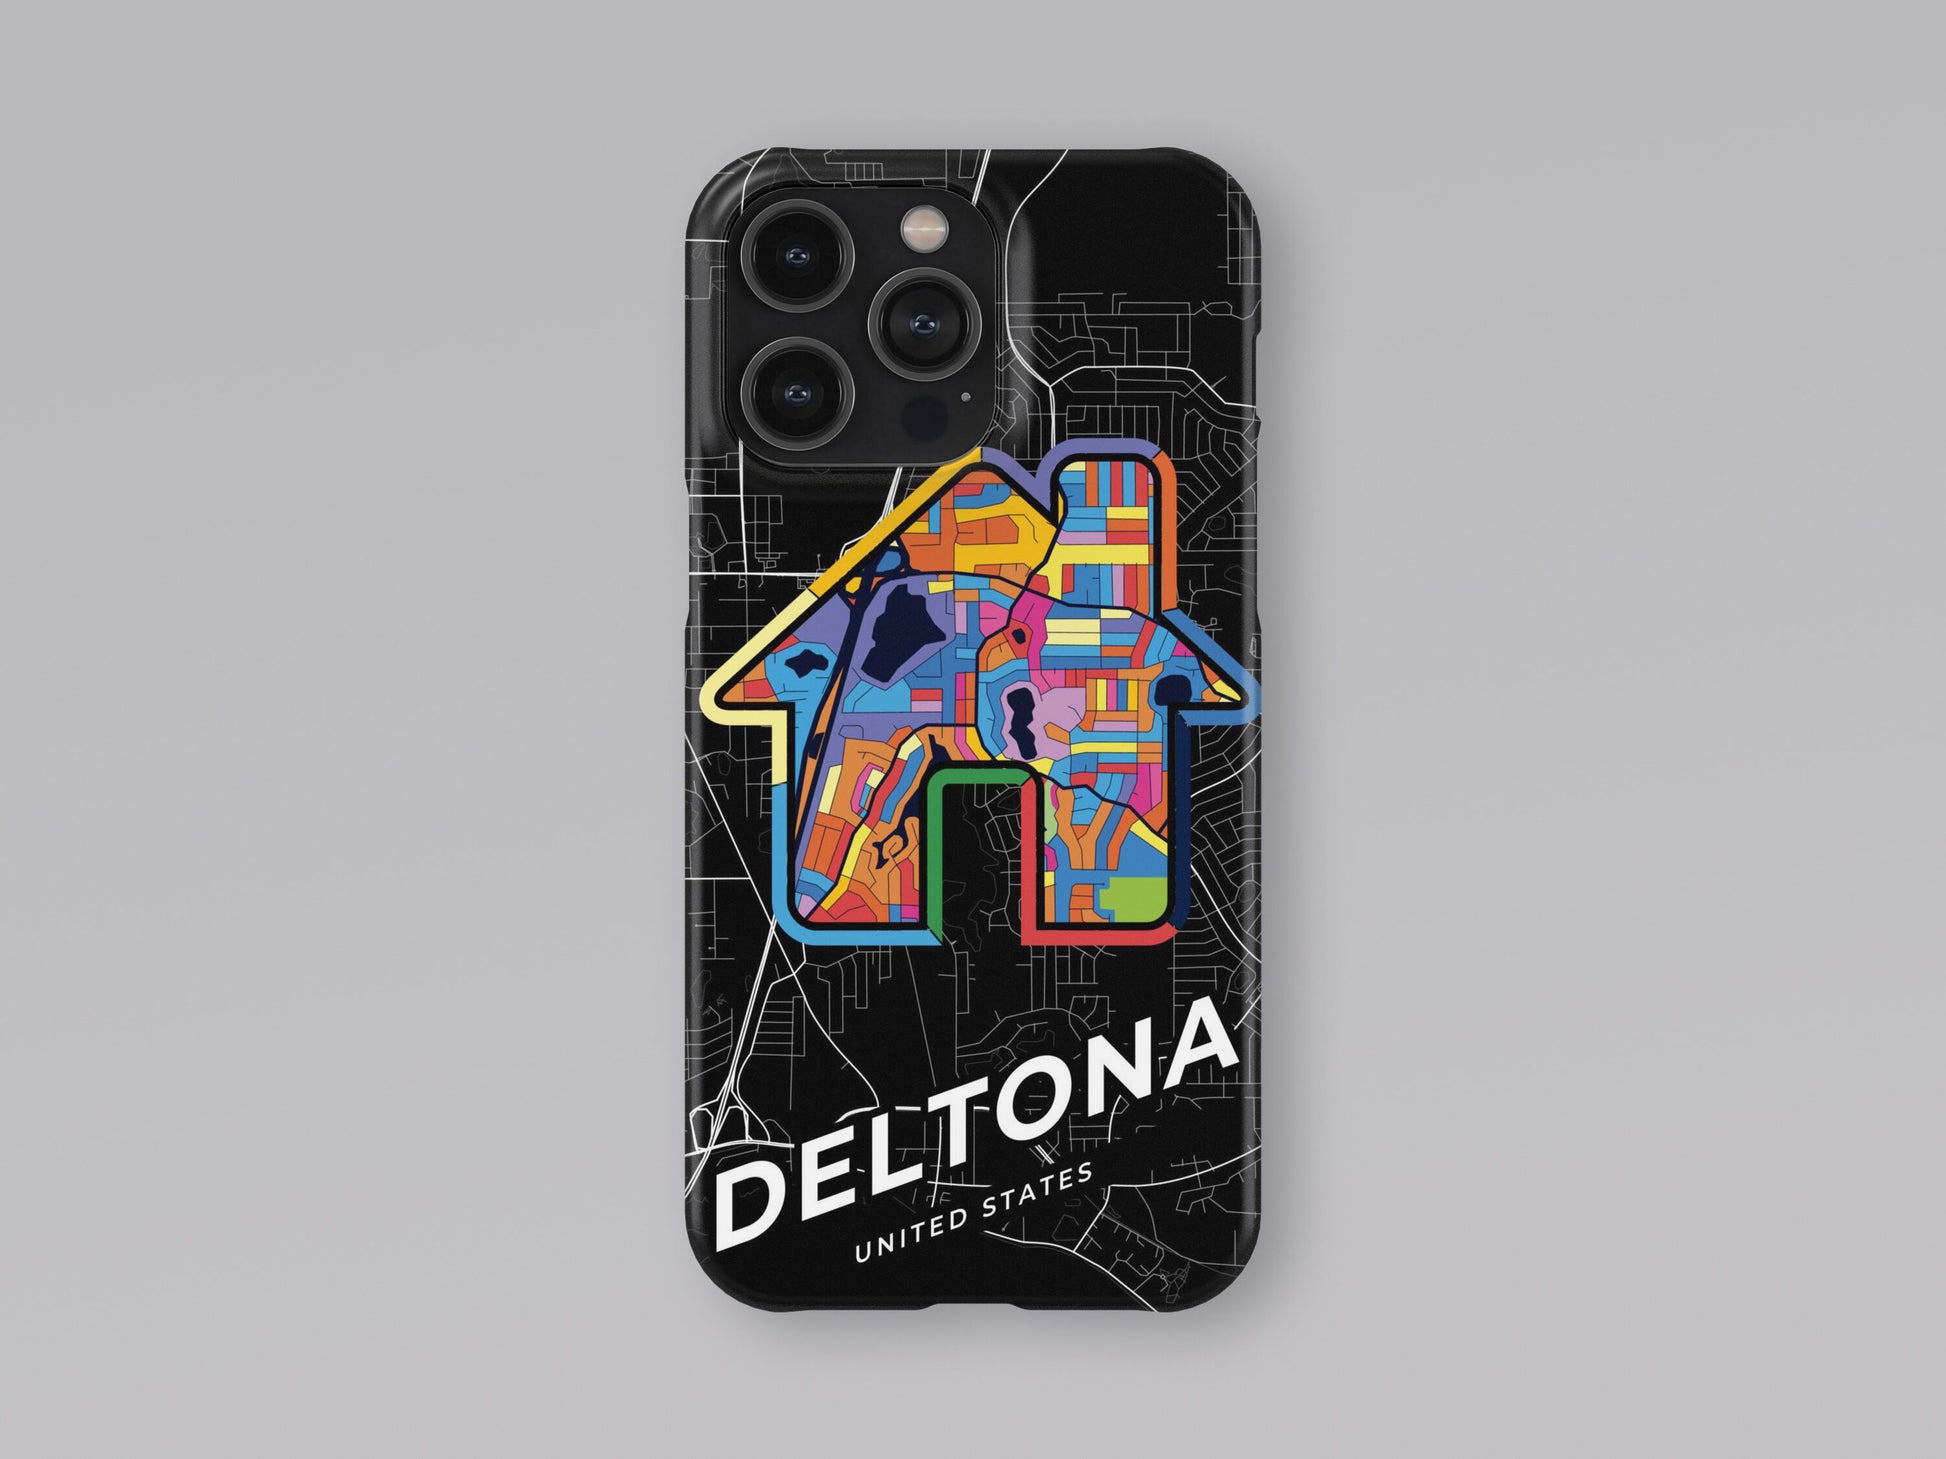 Deltona Florida slim phone case with colorful icon. Birthday, wedding or housewarming gift. Couple match cases. 3